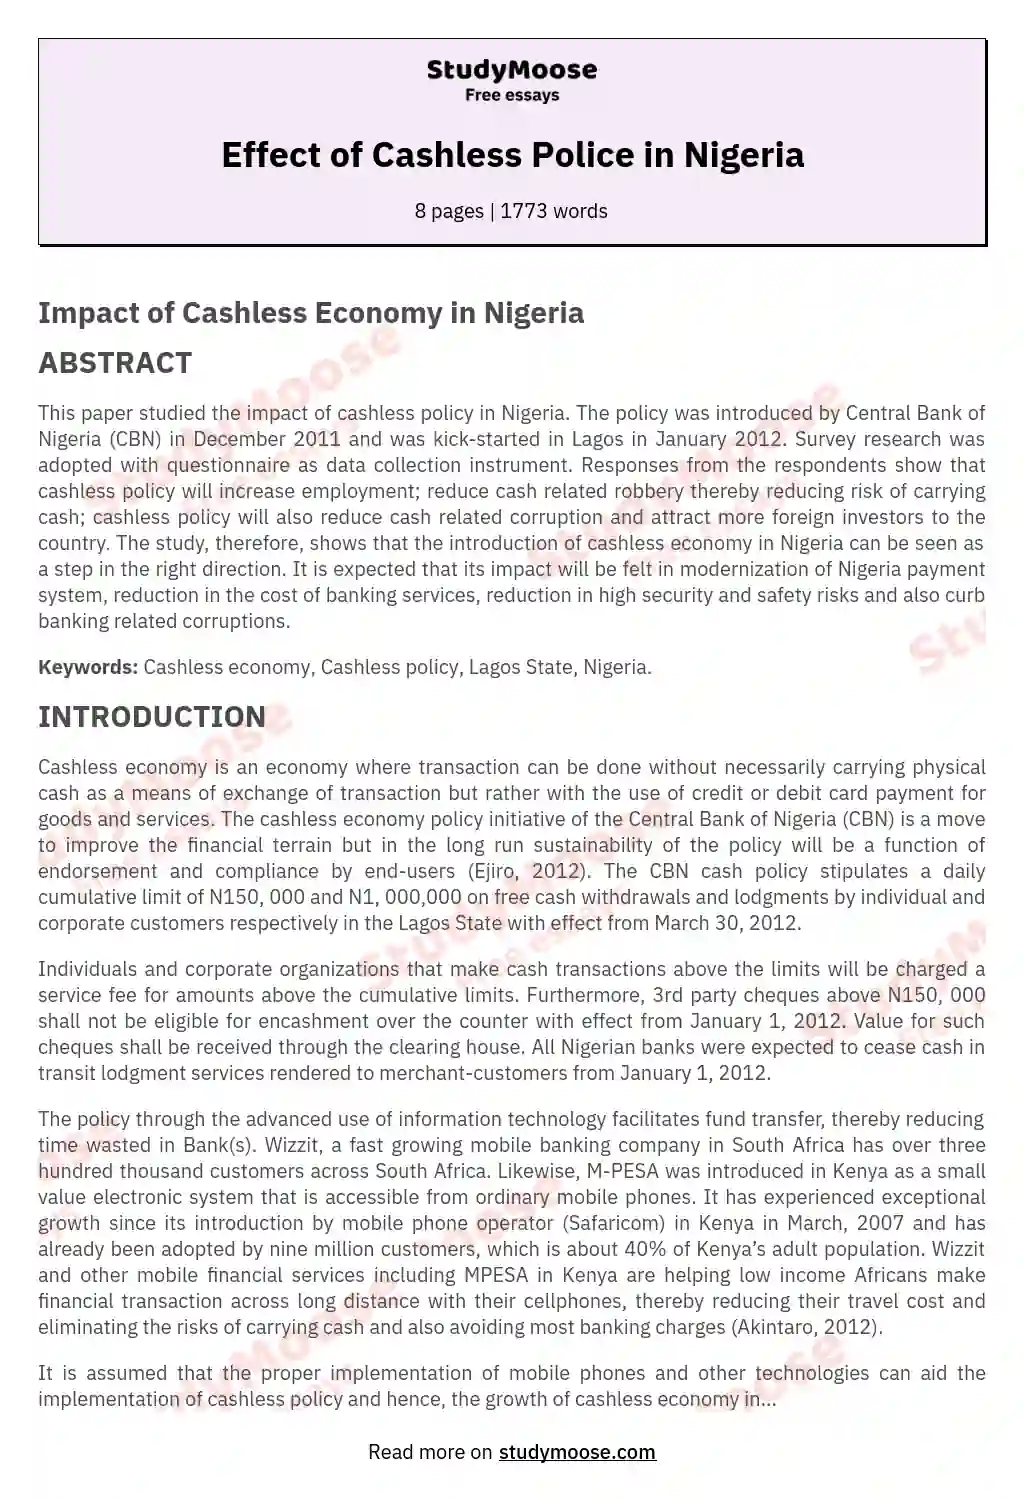 Effect of Cashless Police in Nigeria essay